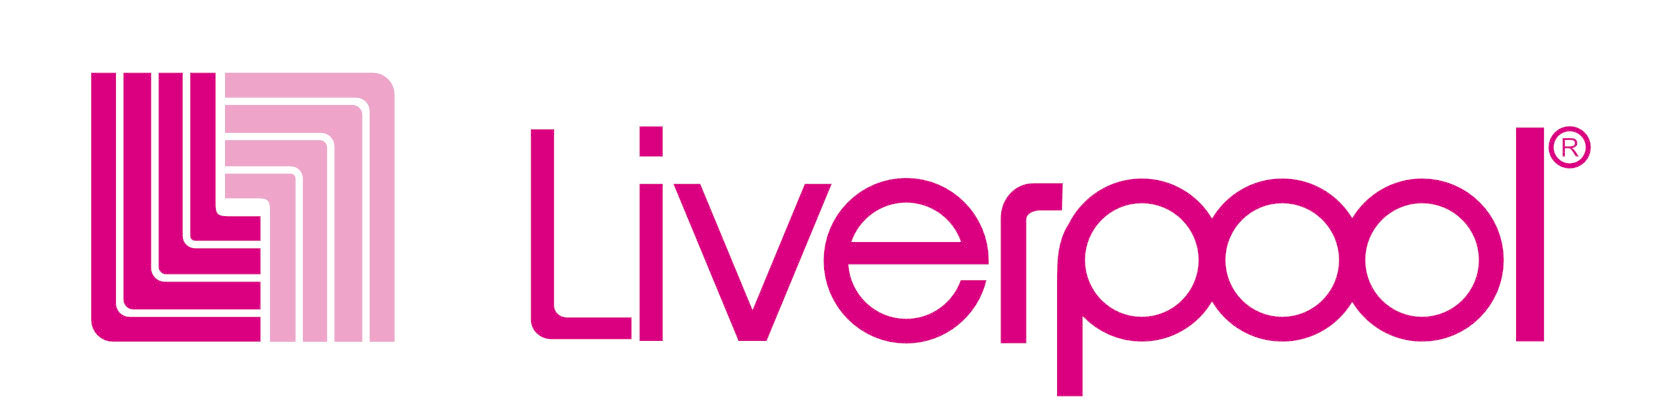 liverpool-logo | Tauroremolques